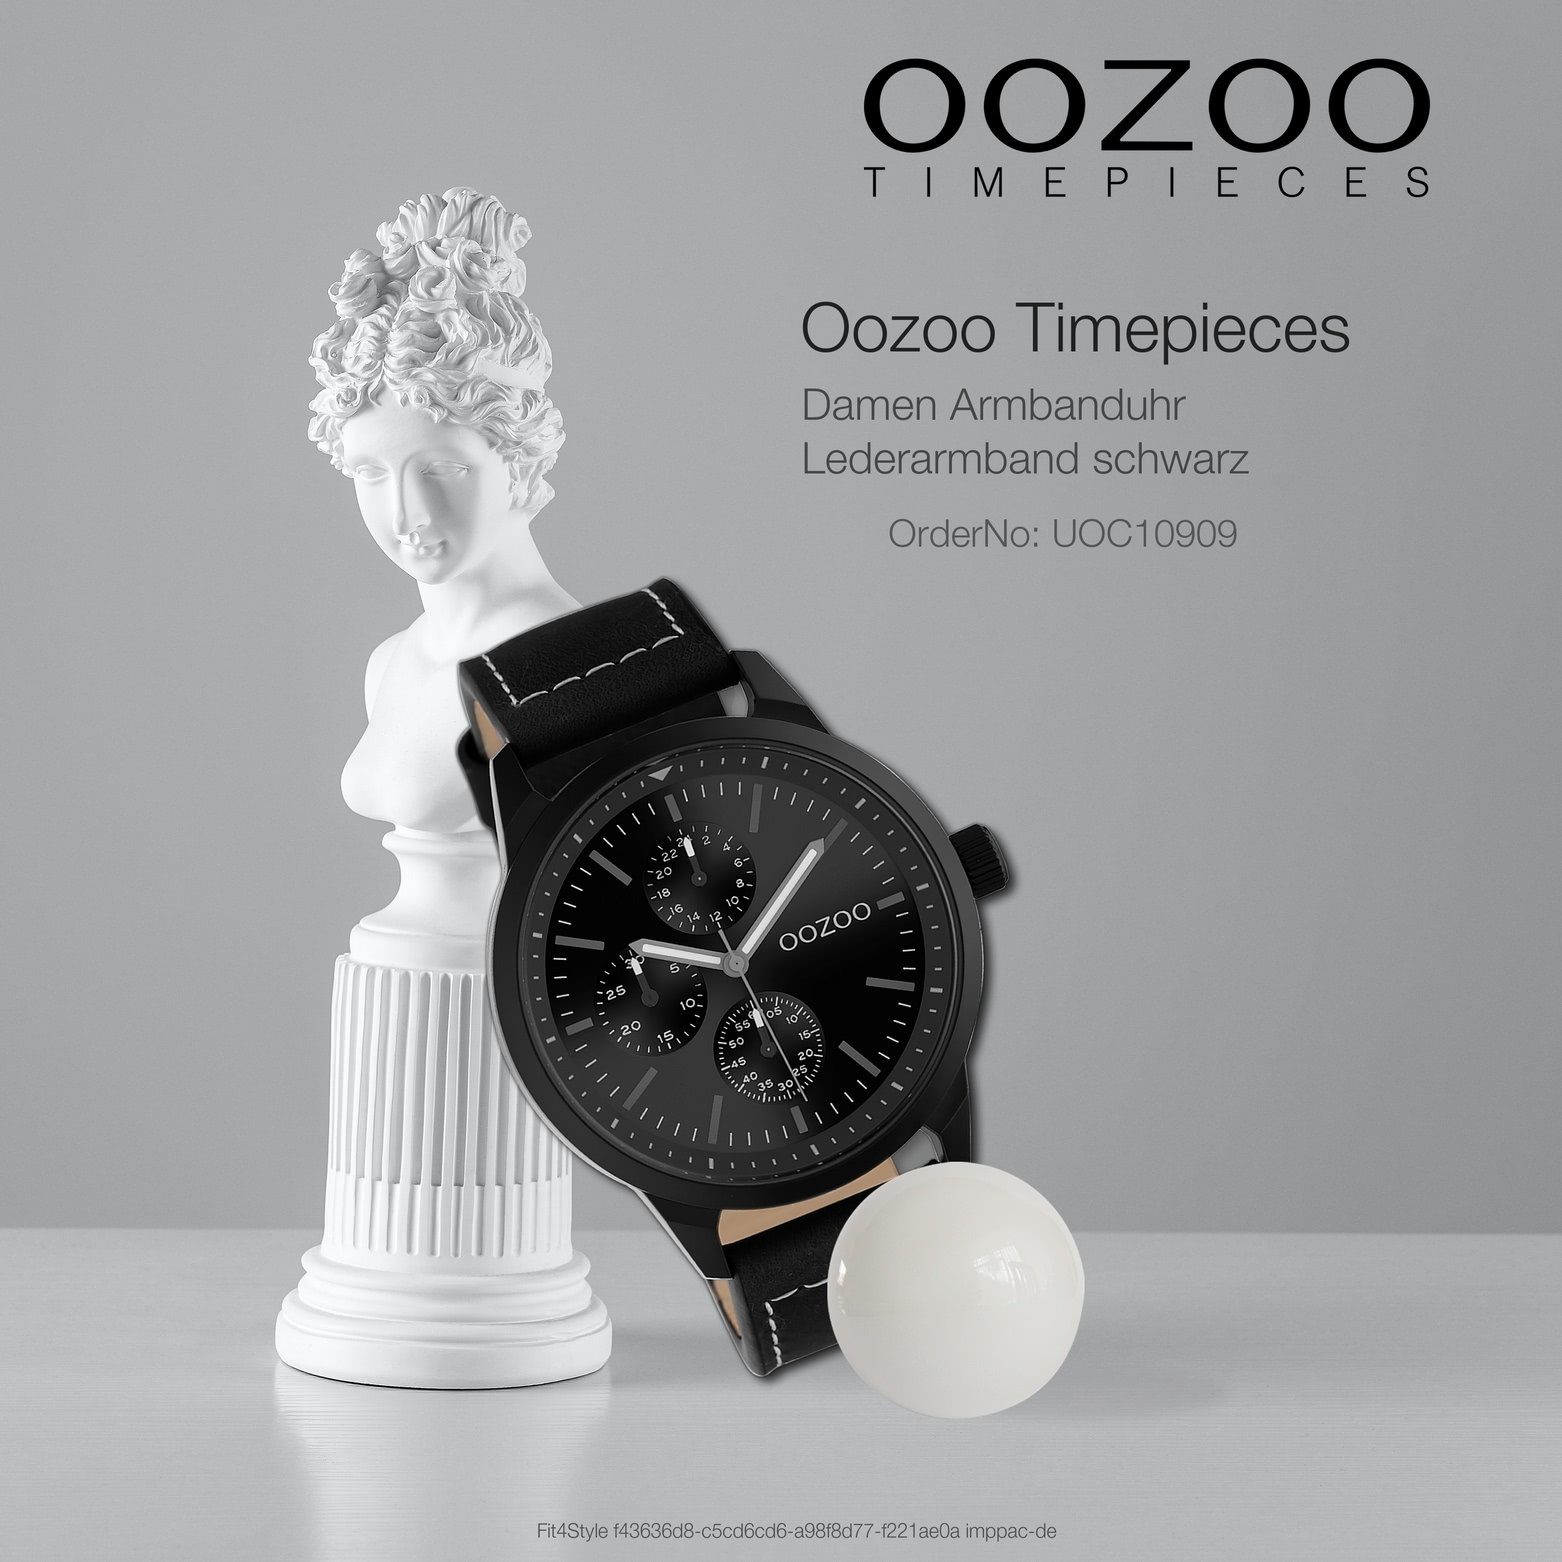 45mm) rund, Analog, Oozoo Casual-Style Damen, OOZOO Herrenuhr Unisex groß schwarz Lederarmband, Quarzuhr (ca. Armbanduhr